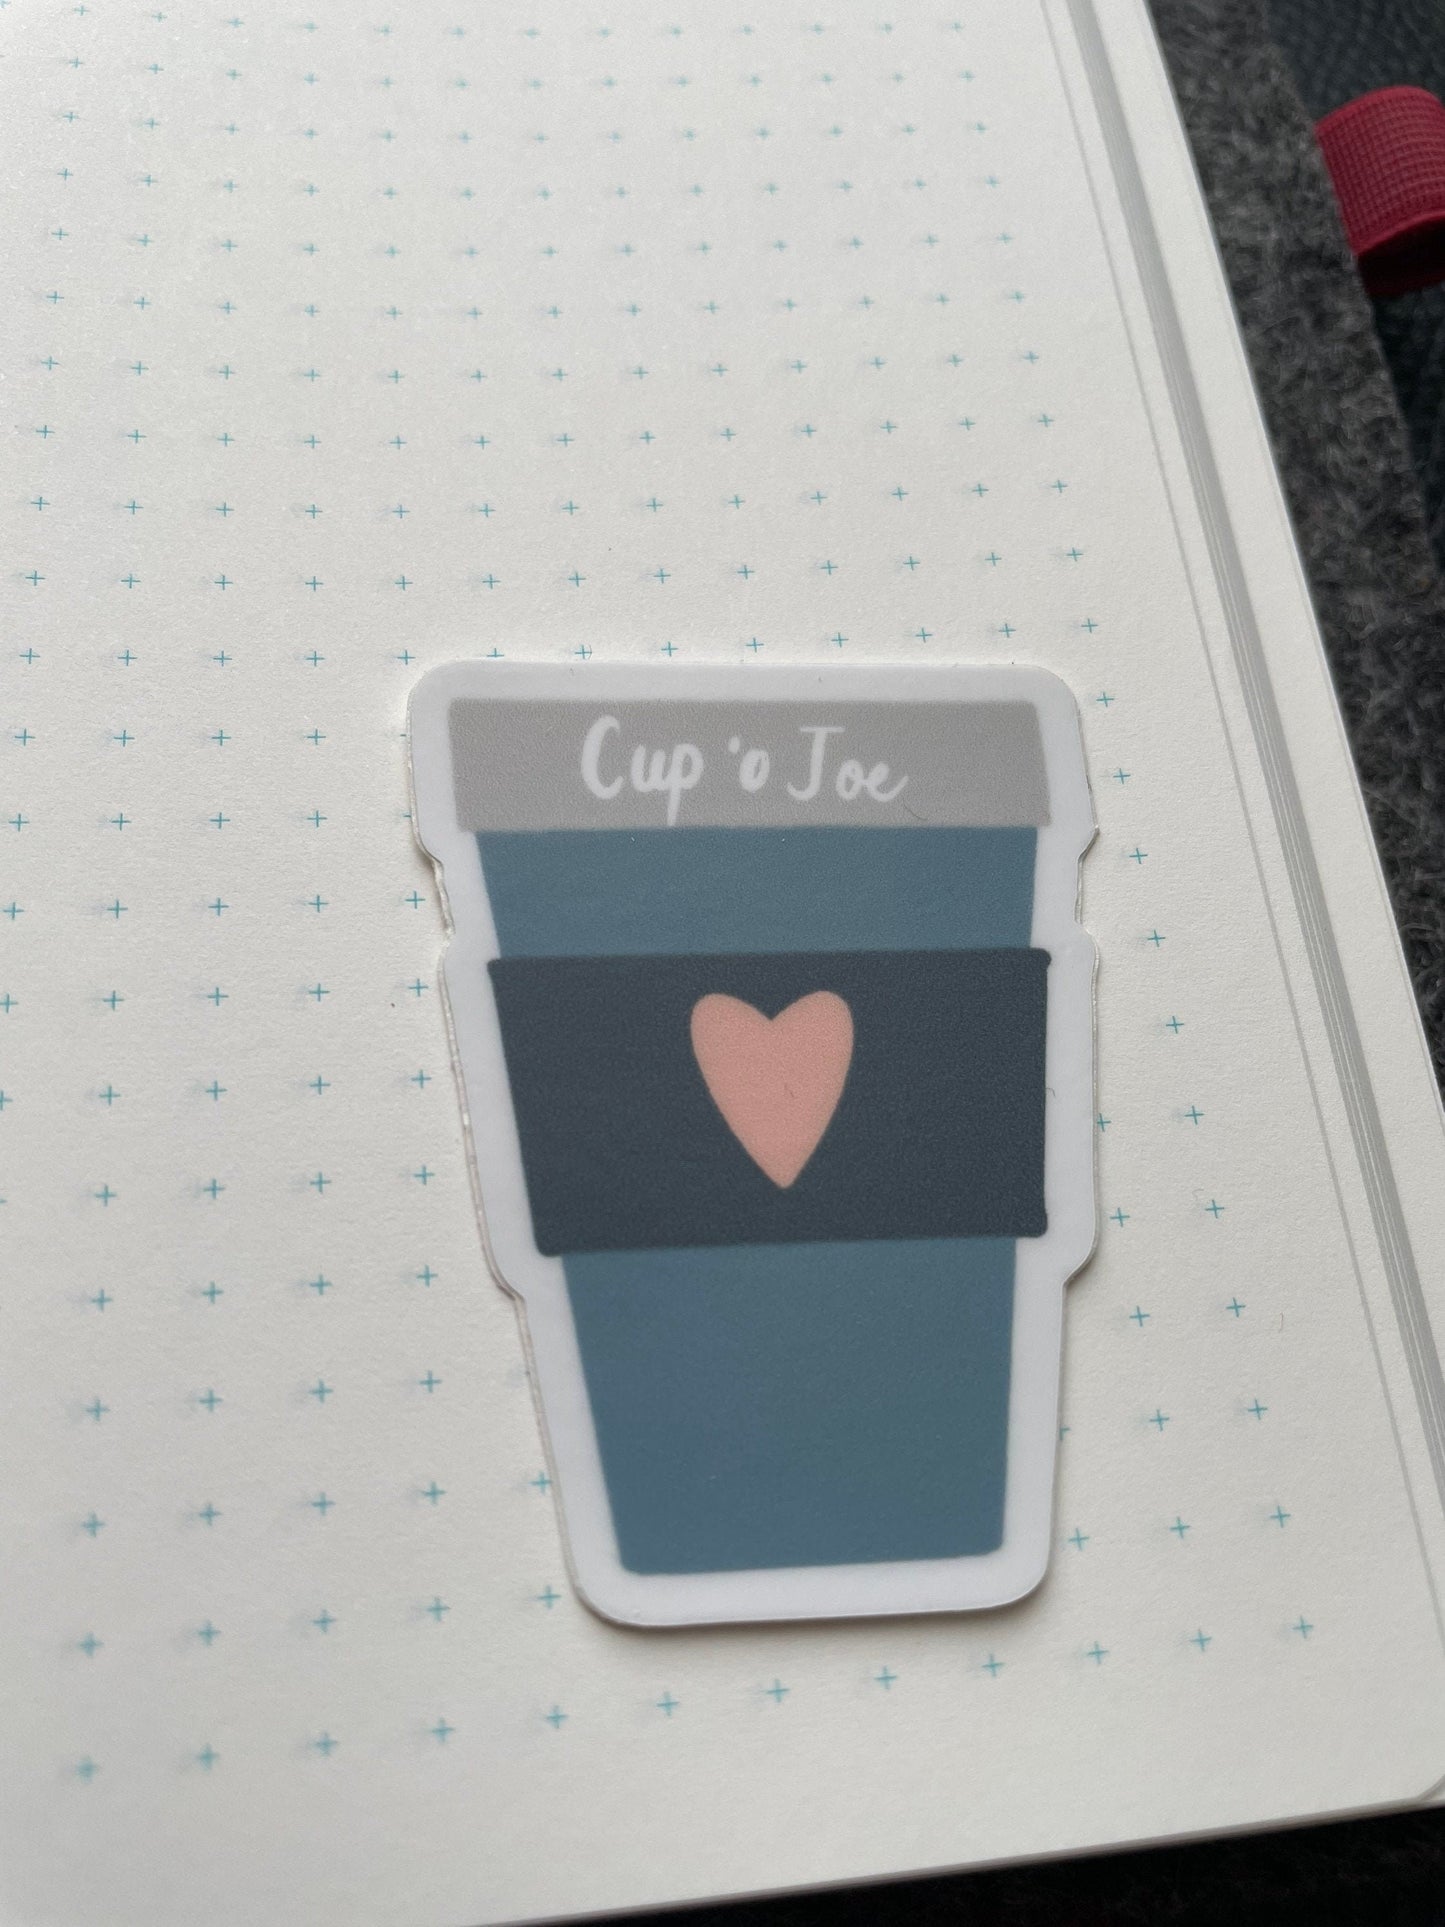 Cup ‘o Joe Vinyl Sticker